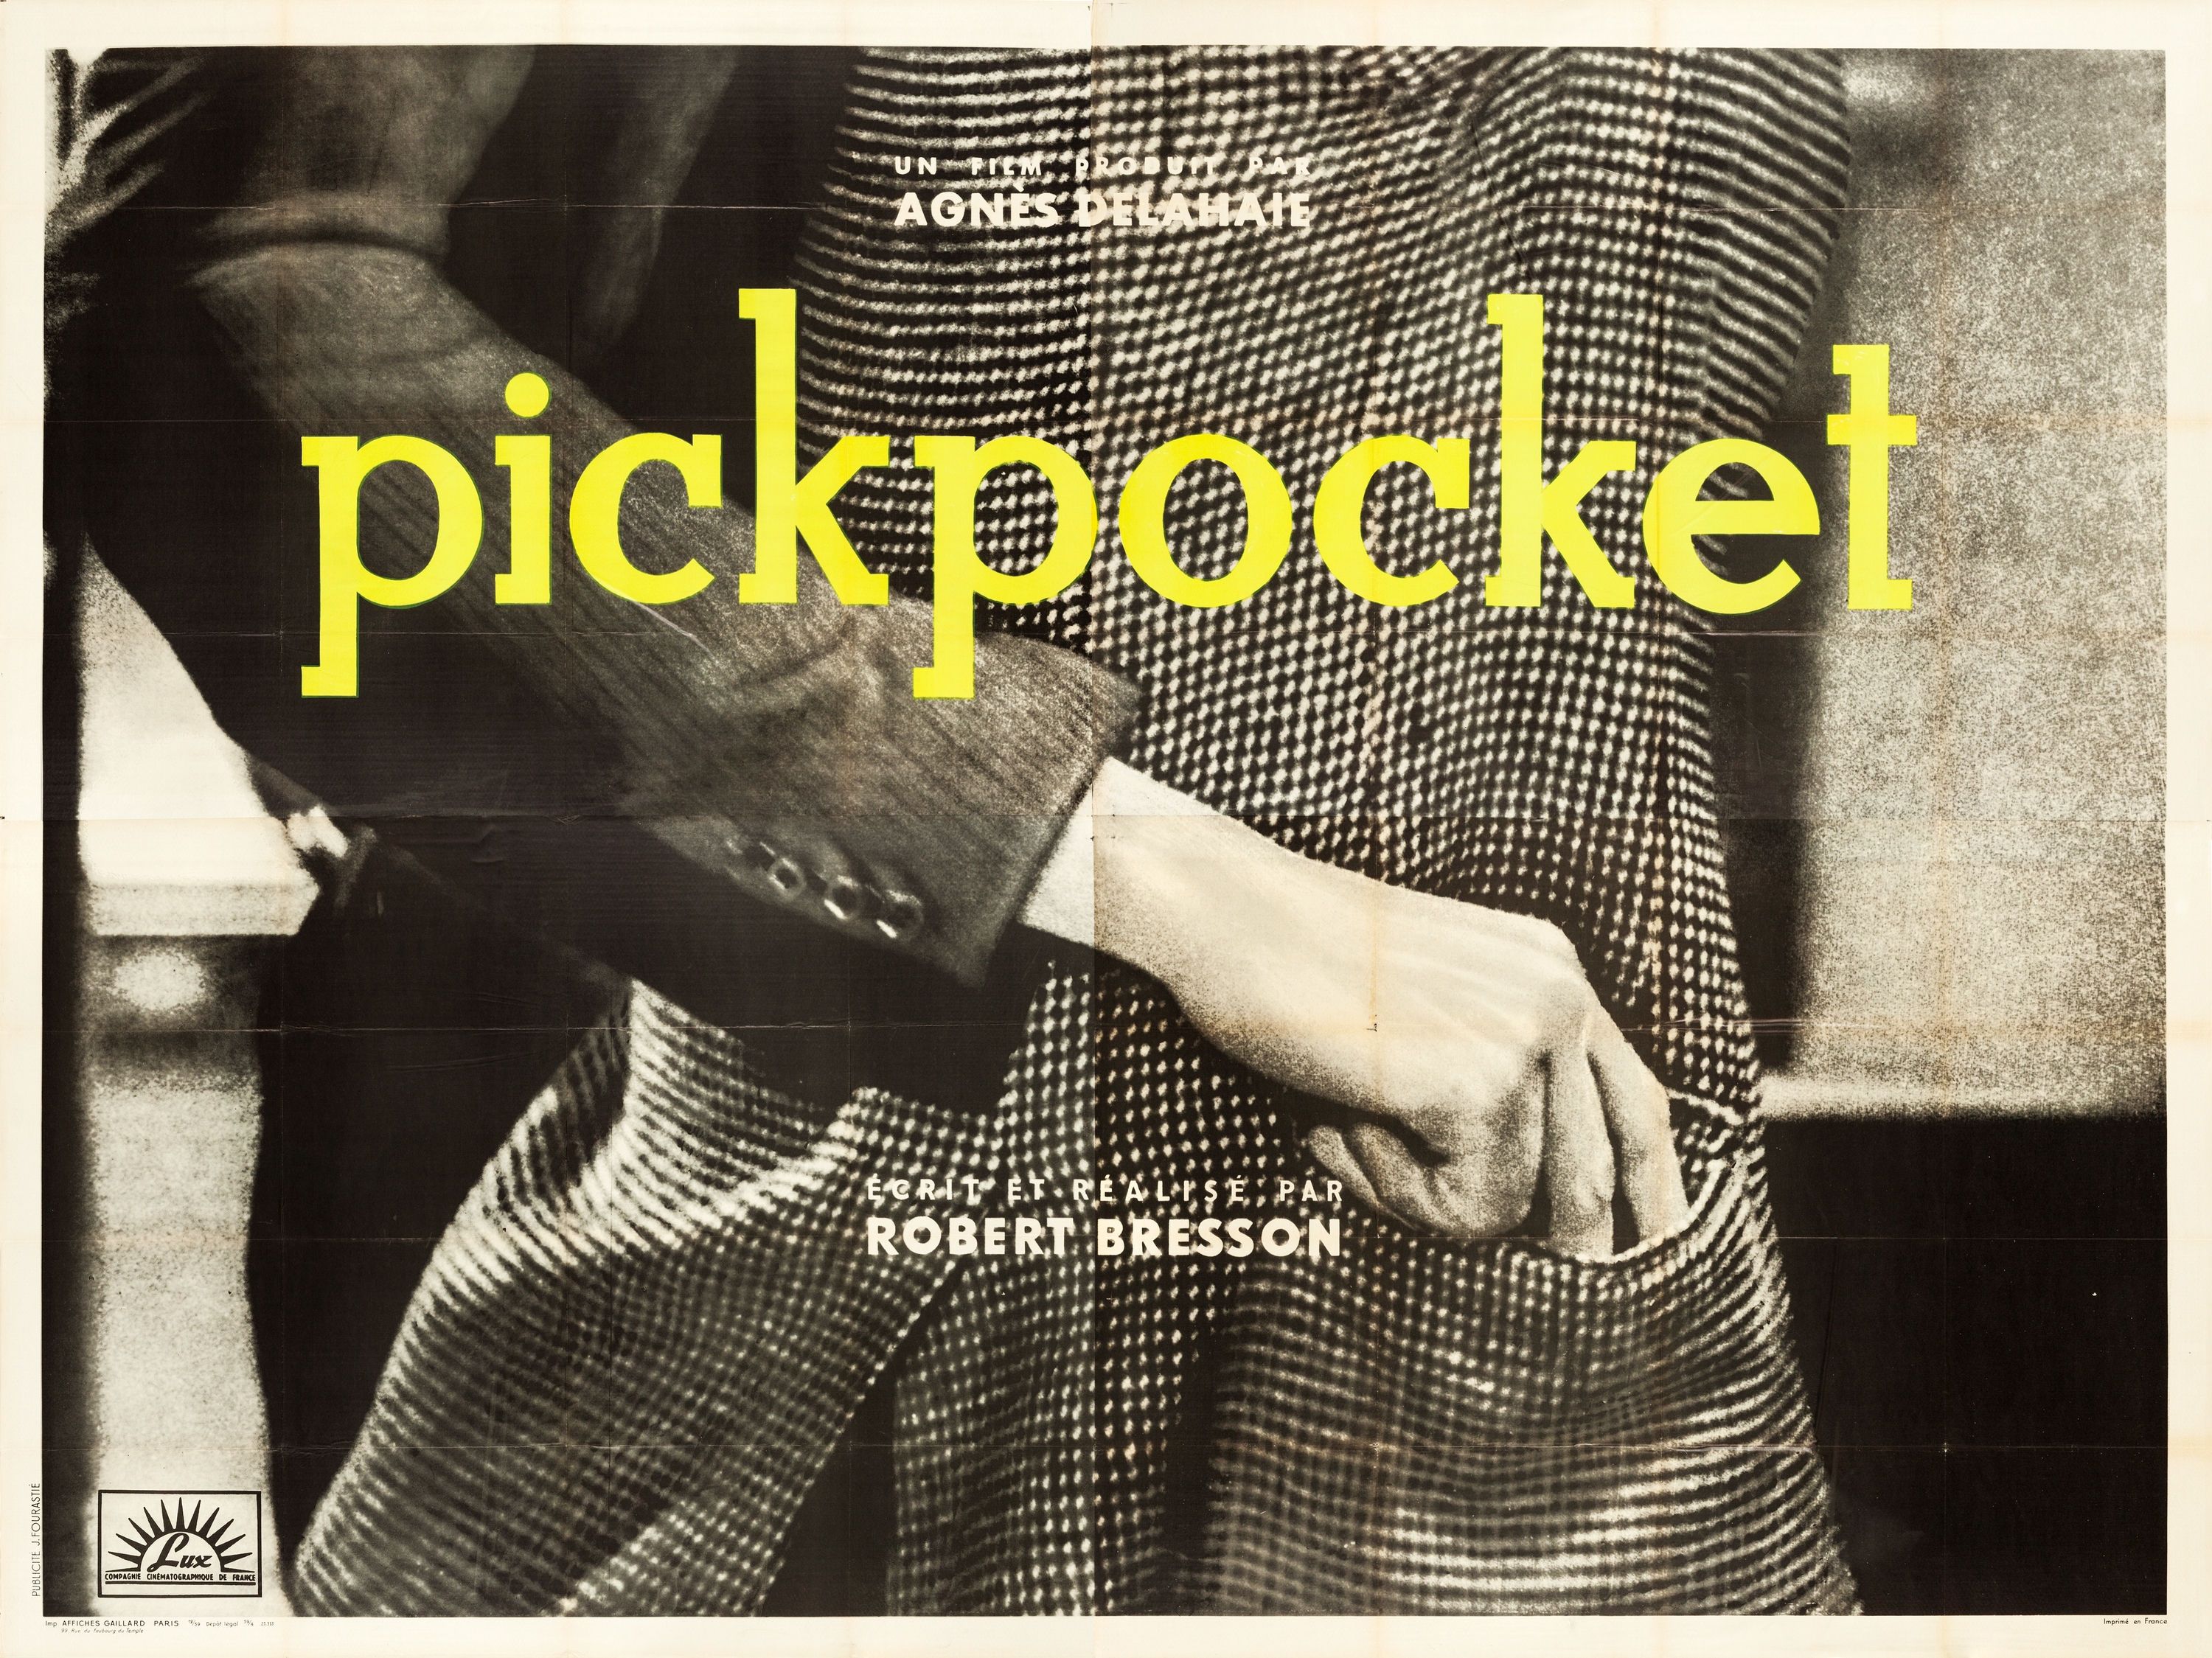 pickpocket legion